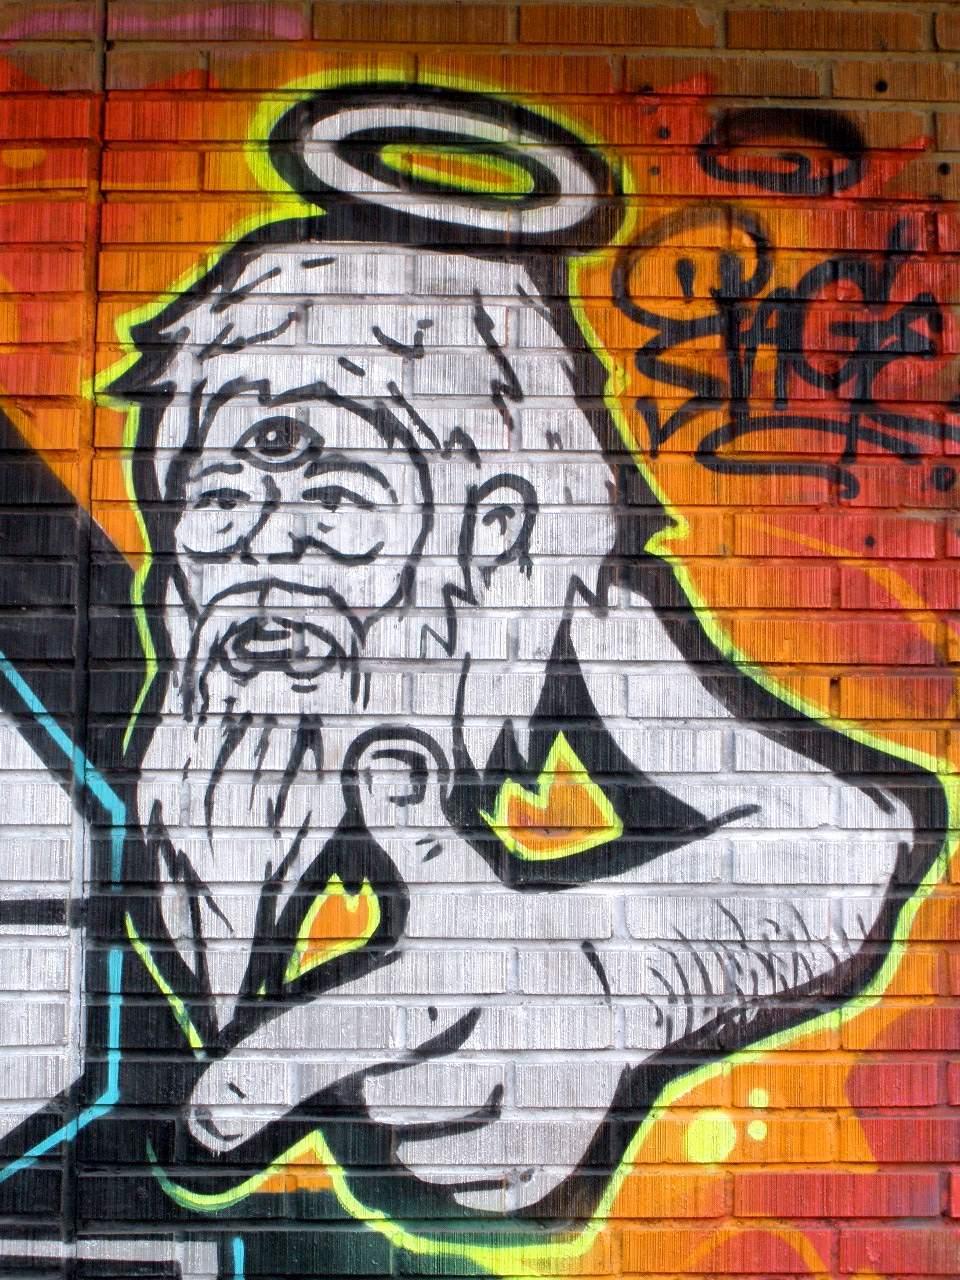 graffitti 'god' with halo